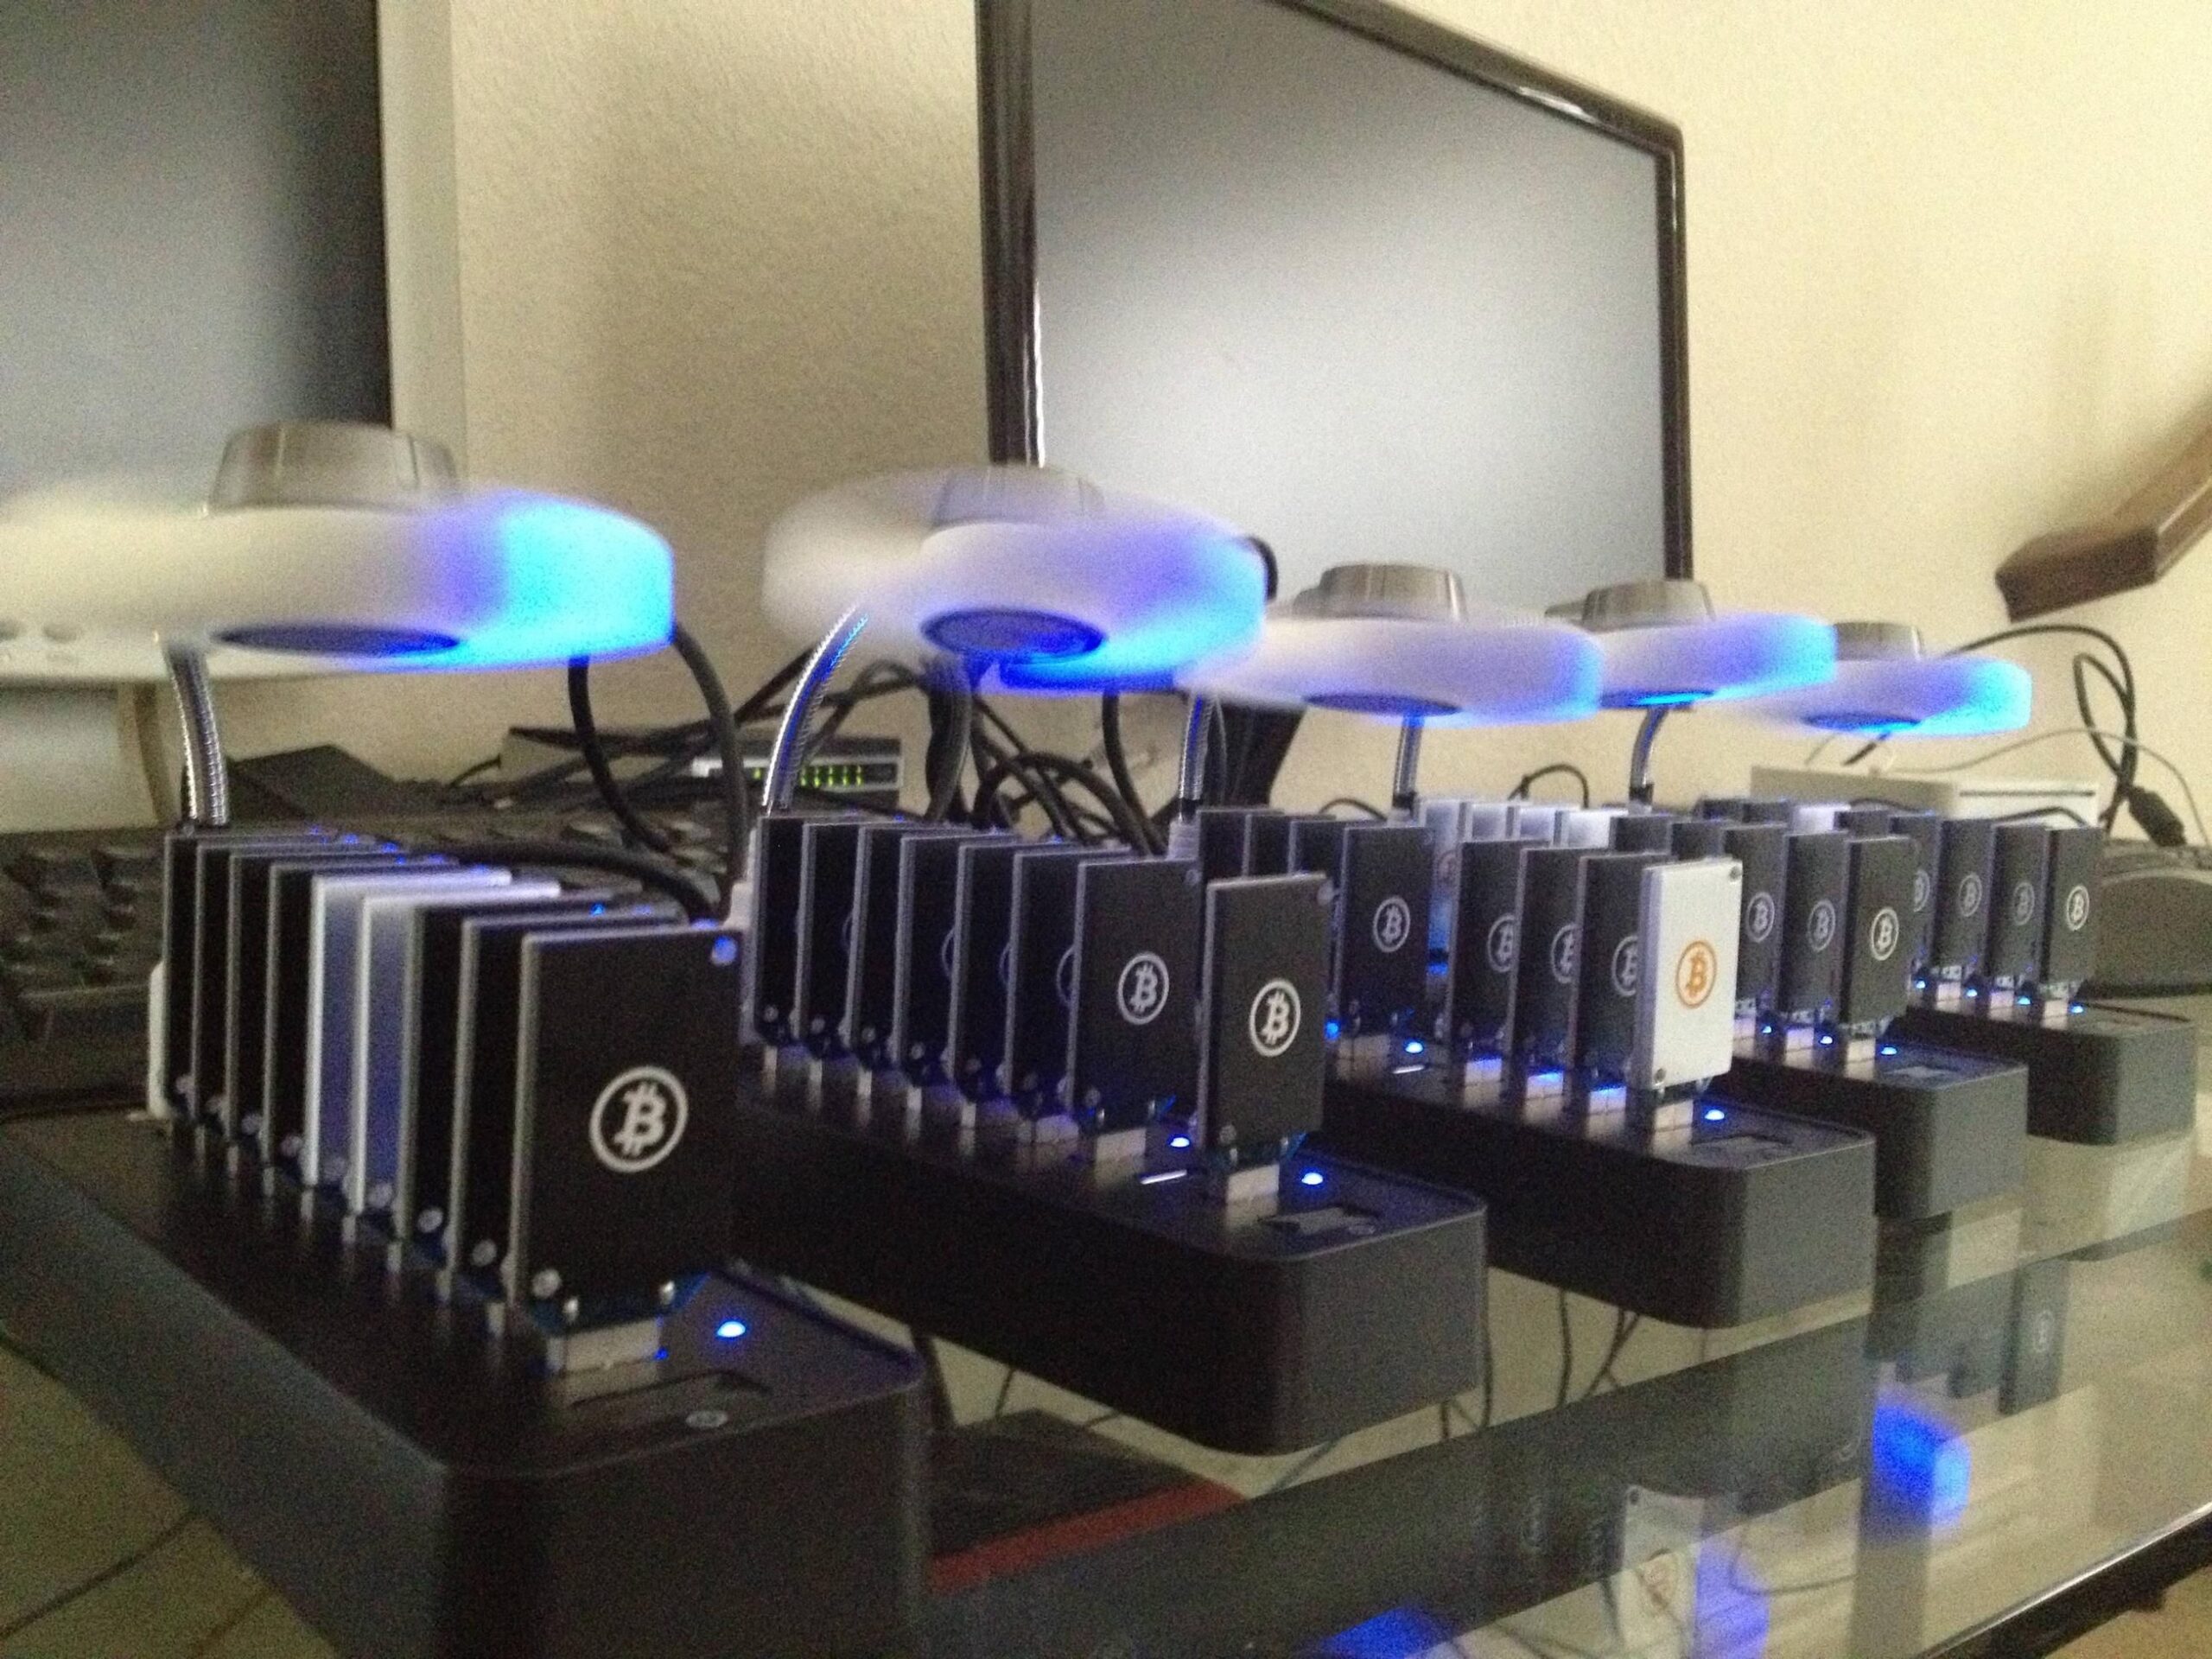 A setup of dozens of USB Bitcoin miners plugged into USB hubs